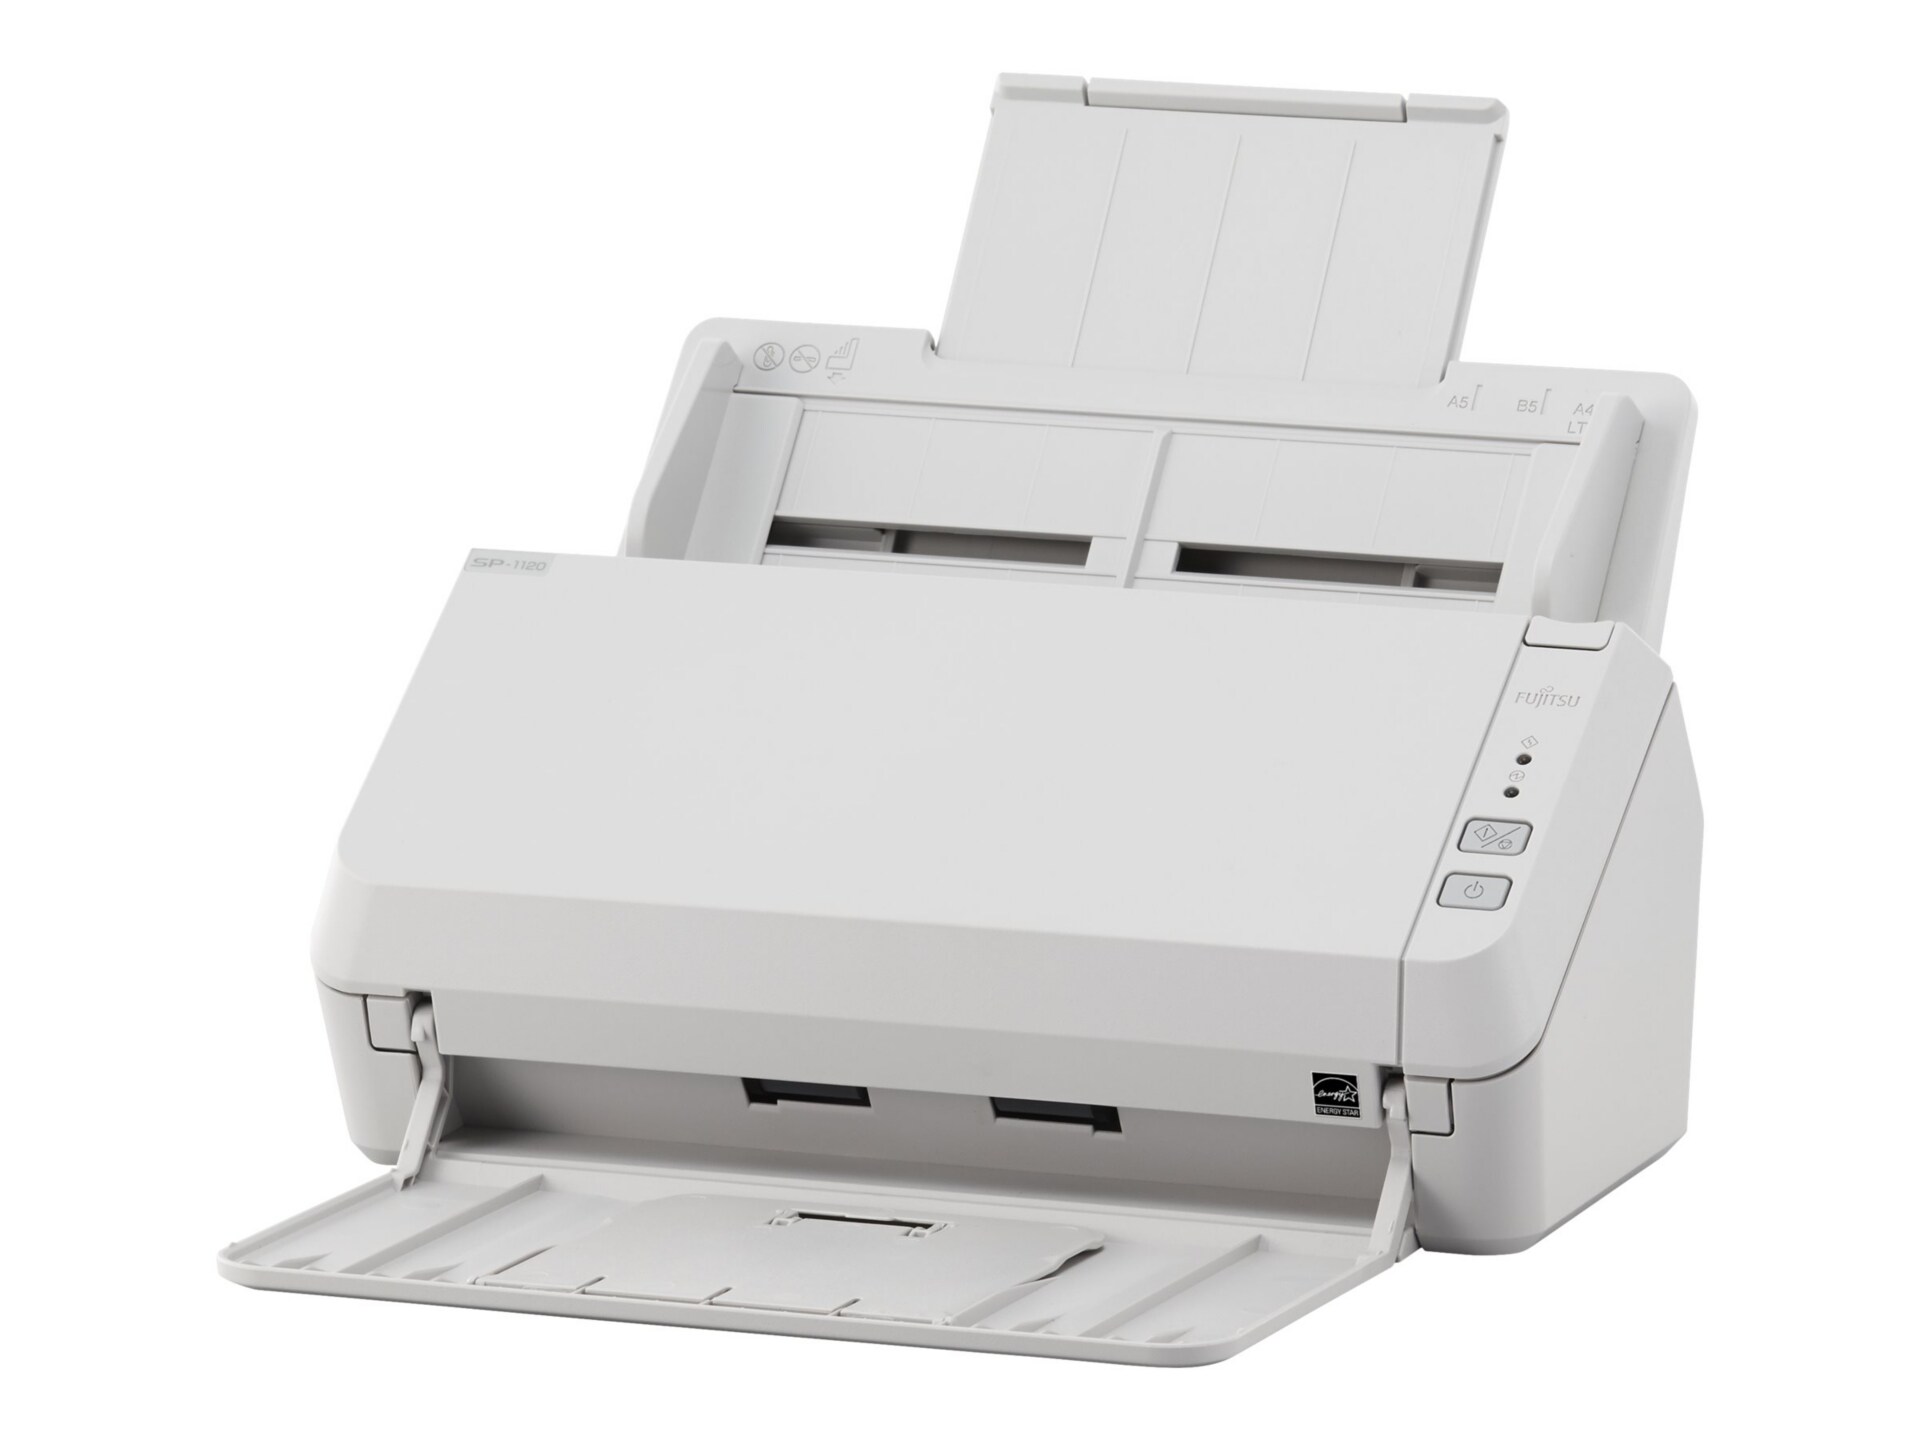 Fujitsu SP-1120 - document scanner - desktop